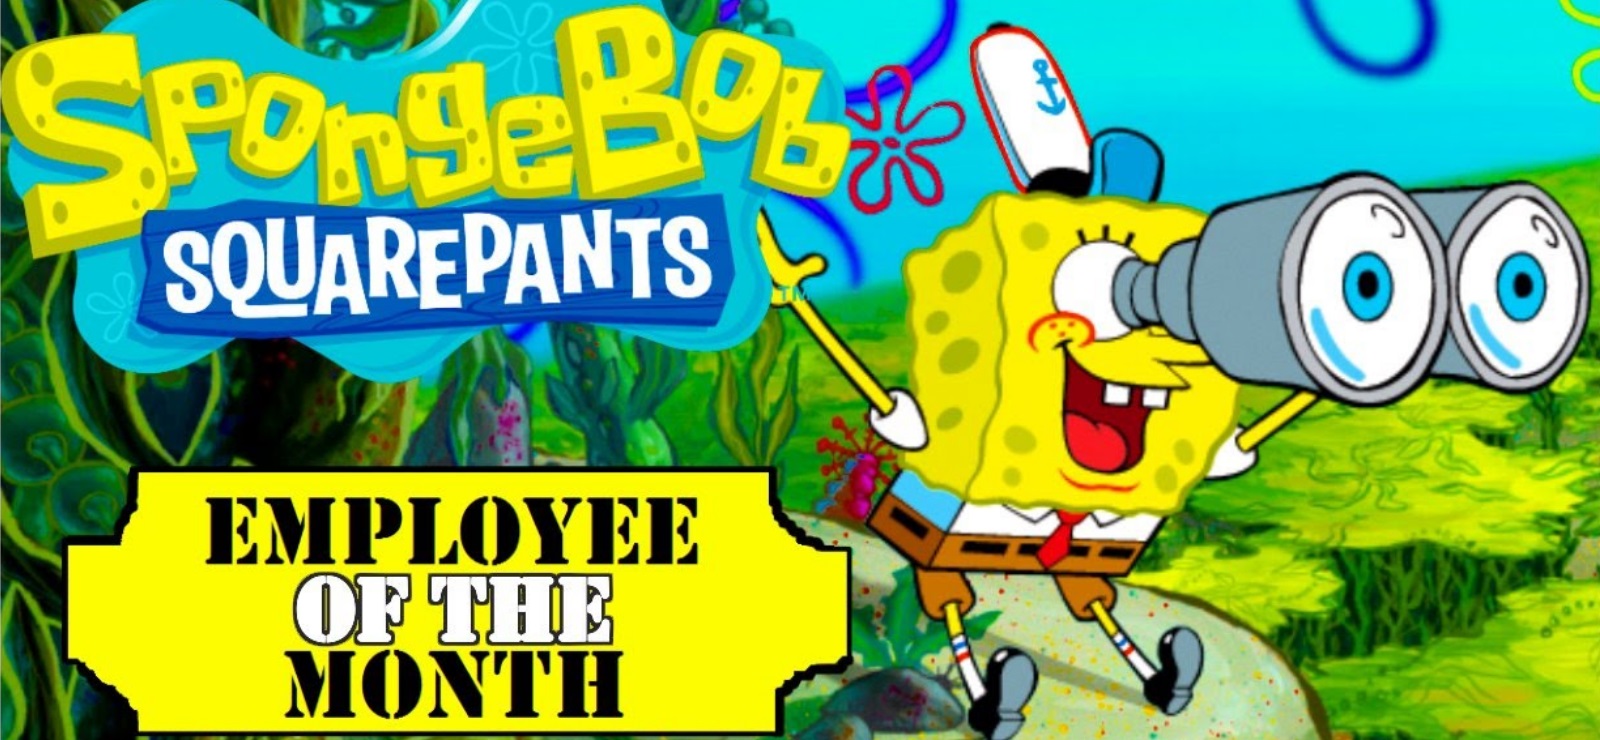 spongebob squarepants employee of the month download free